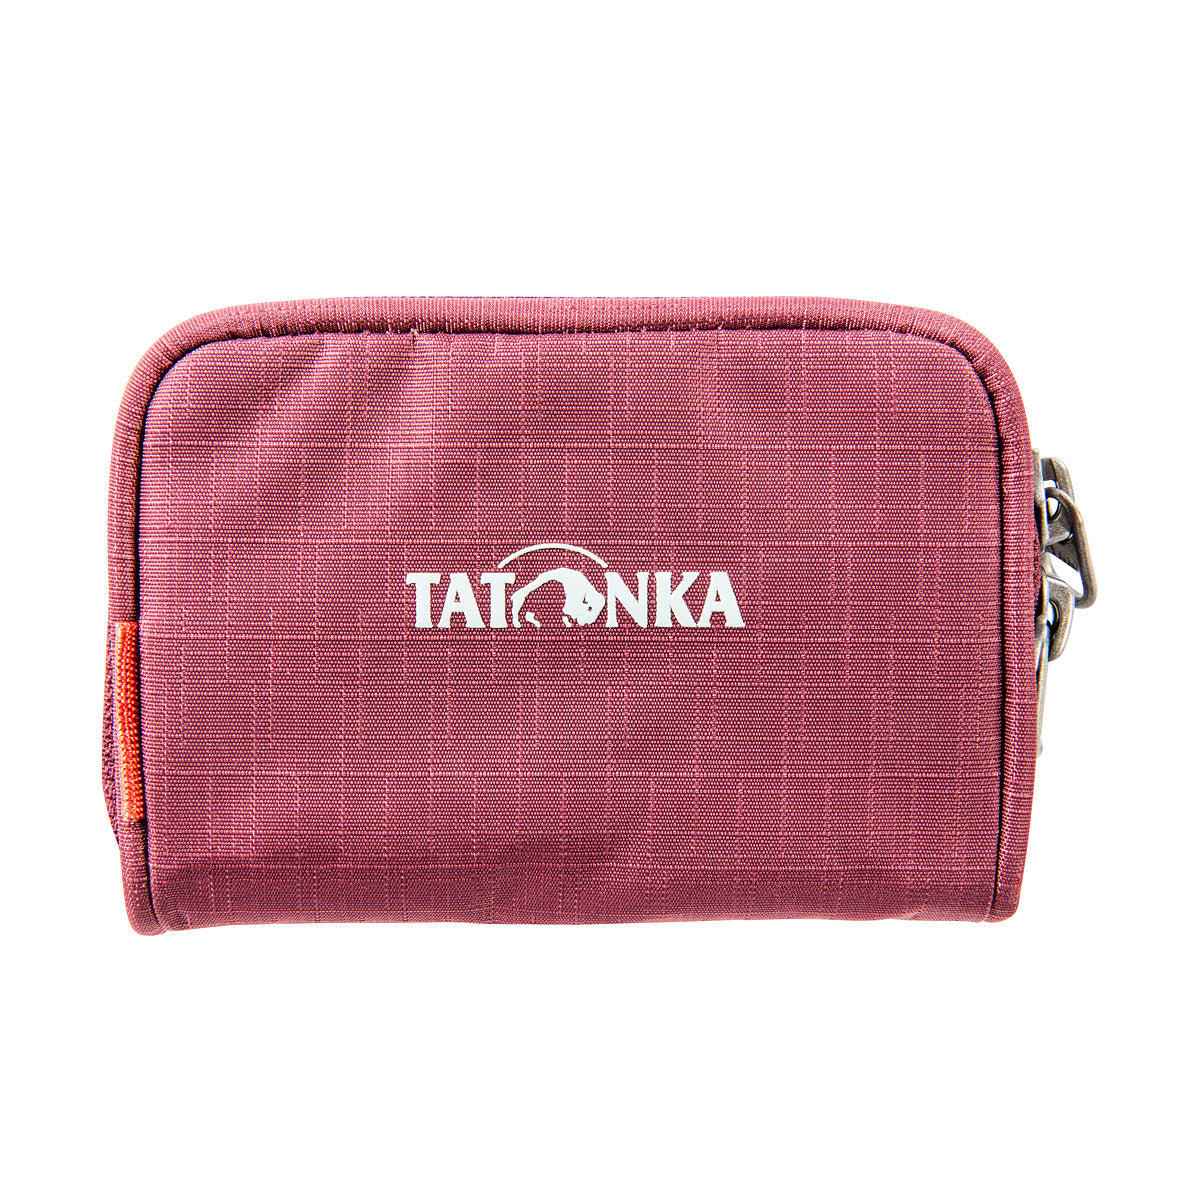 Tatonka Plain wallet, bordeaux red